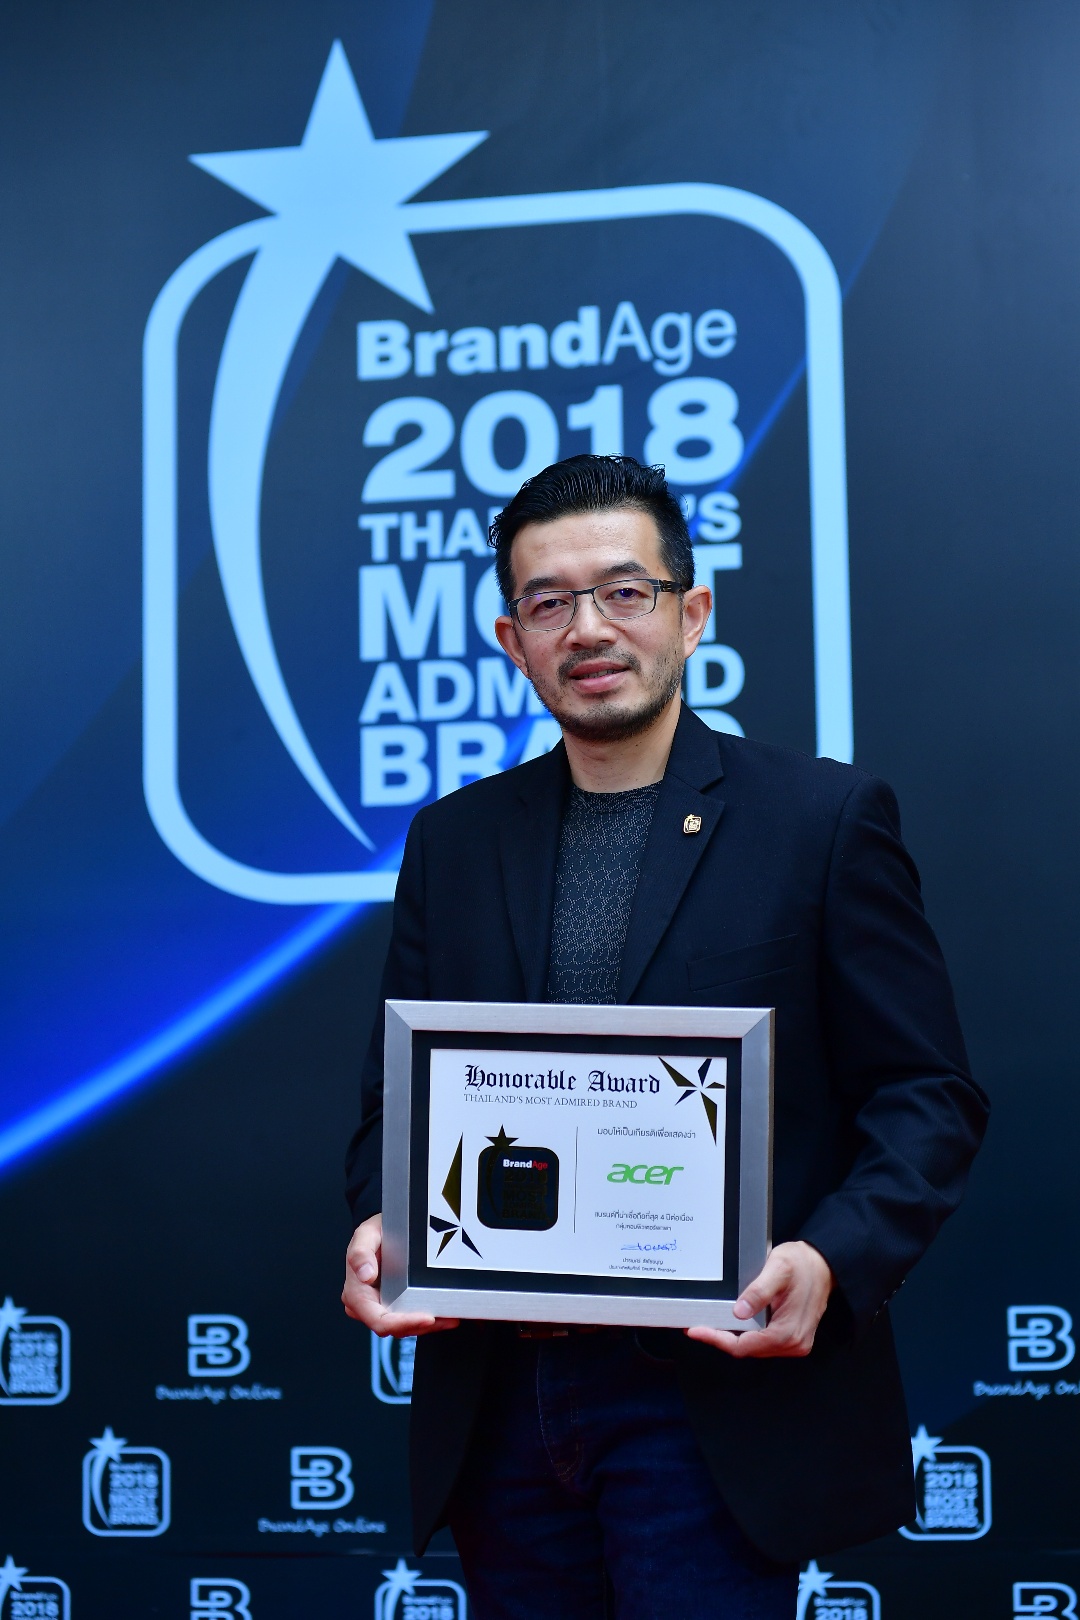 arr 0145 เอเซอร์ ตอกย้ำแบรนด์ที่ได้รับความไว้วางใจจากผู้บริโภค คว้ารางวัล “Thailand’s Most Admired Brand 2018” ติดต่อกันเป็นปีที่ 8